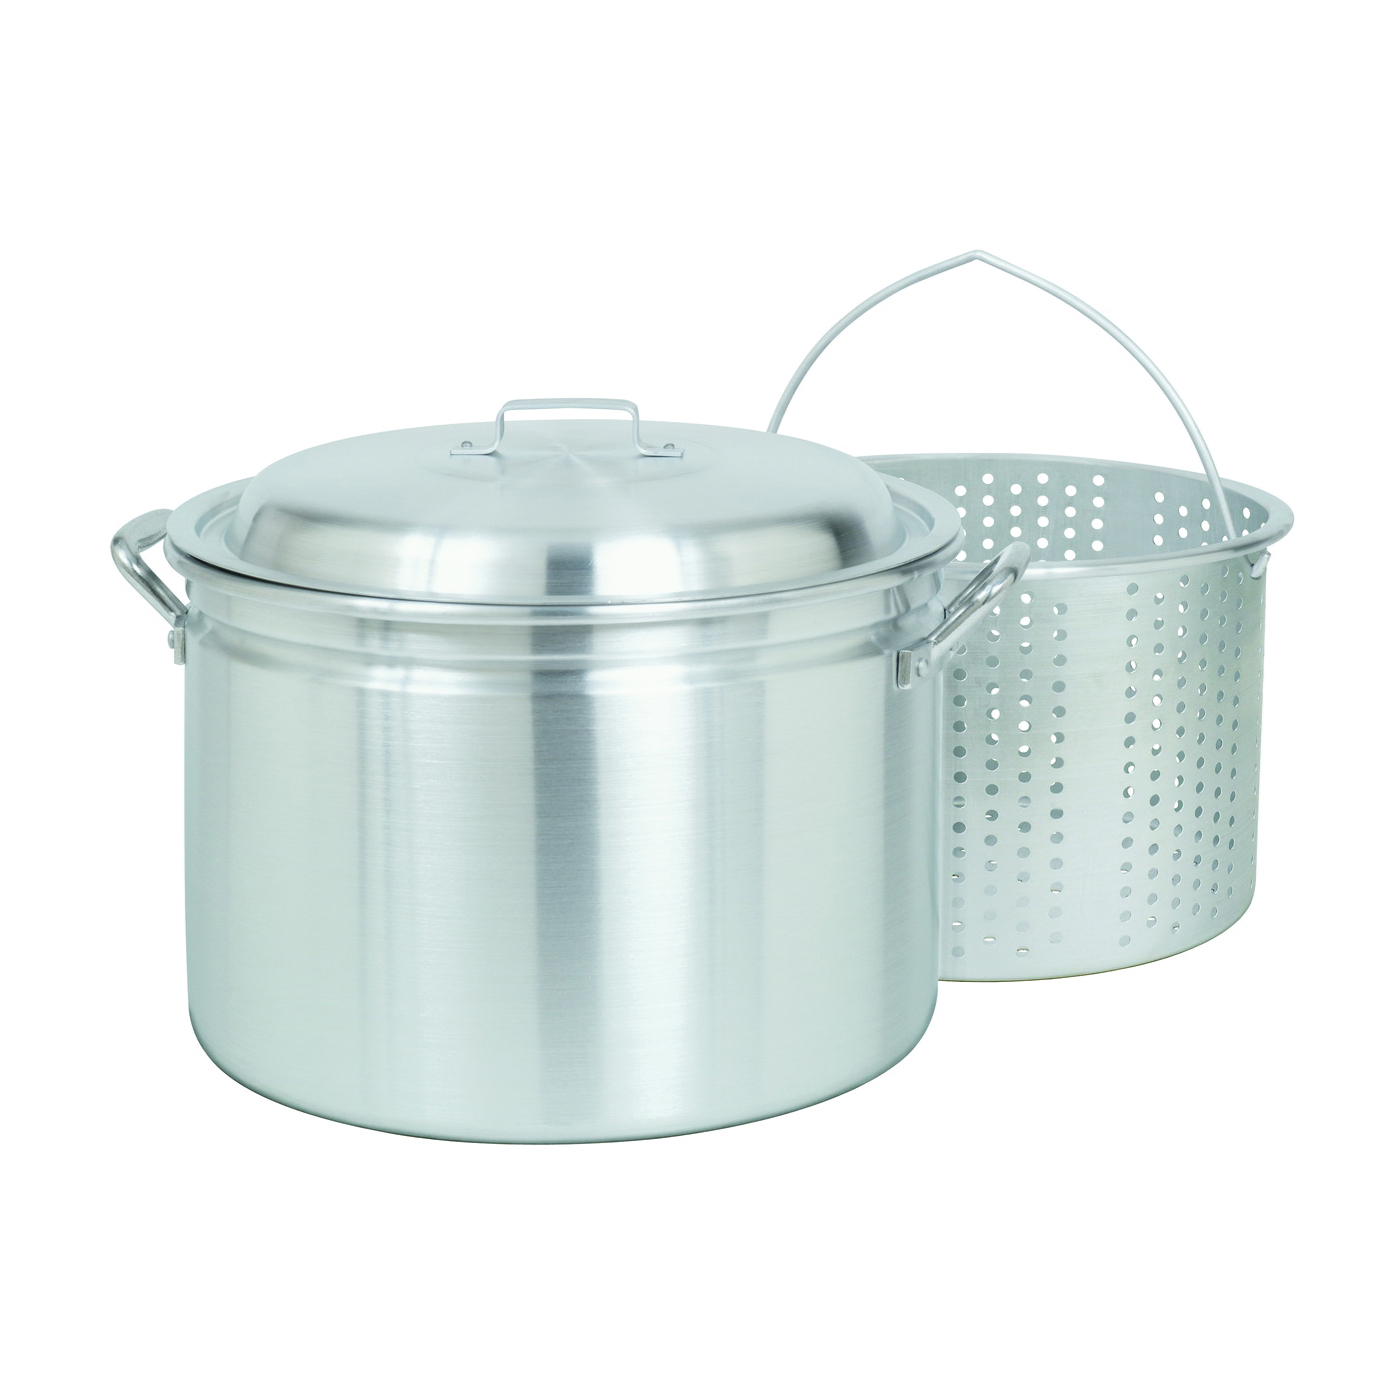 4024 Stock Pot with Basket, 24 qt Capacity, Aluminum